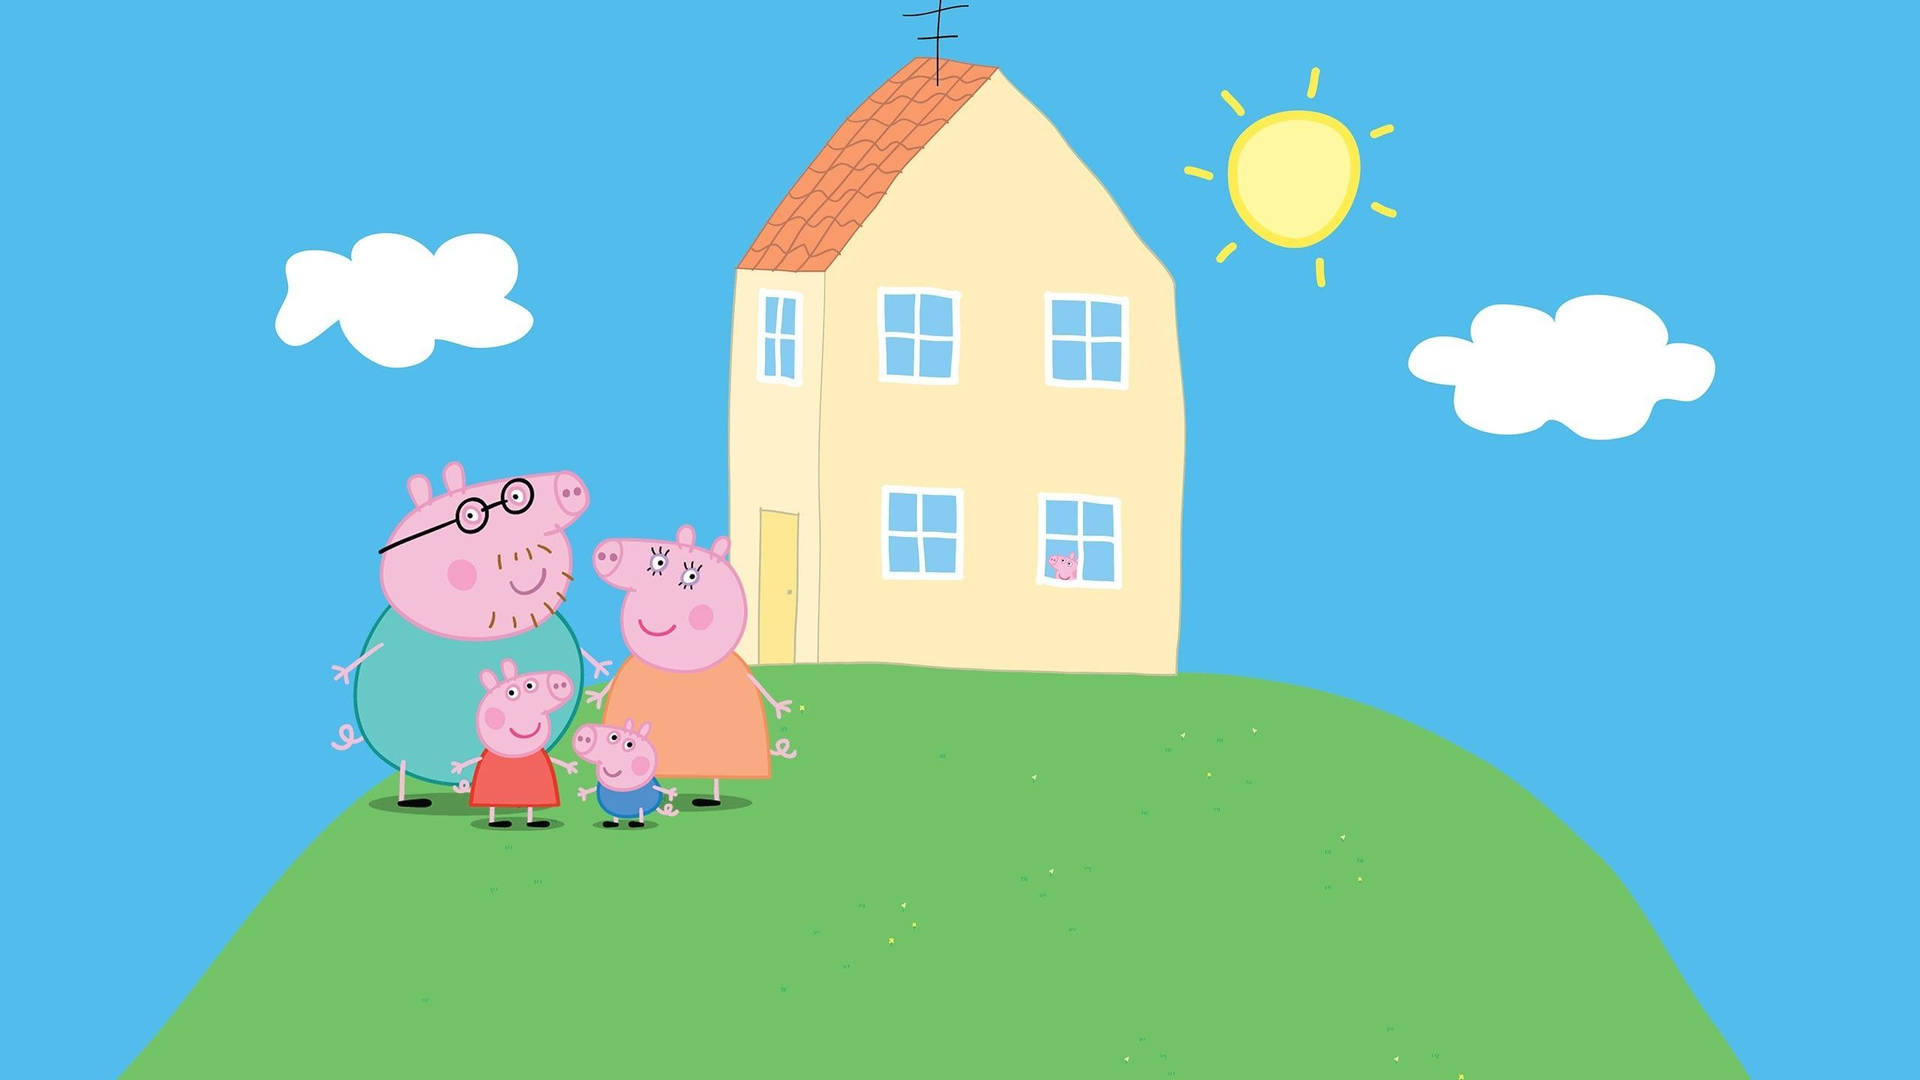 Peppa Pig Home
Cartoon Network Characters Wallpaper